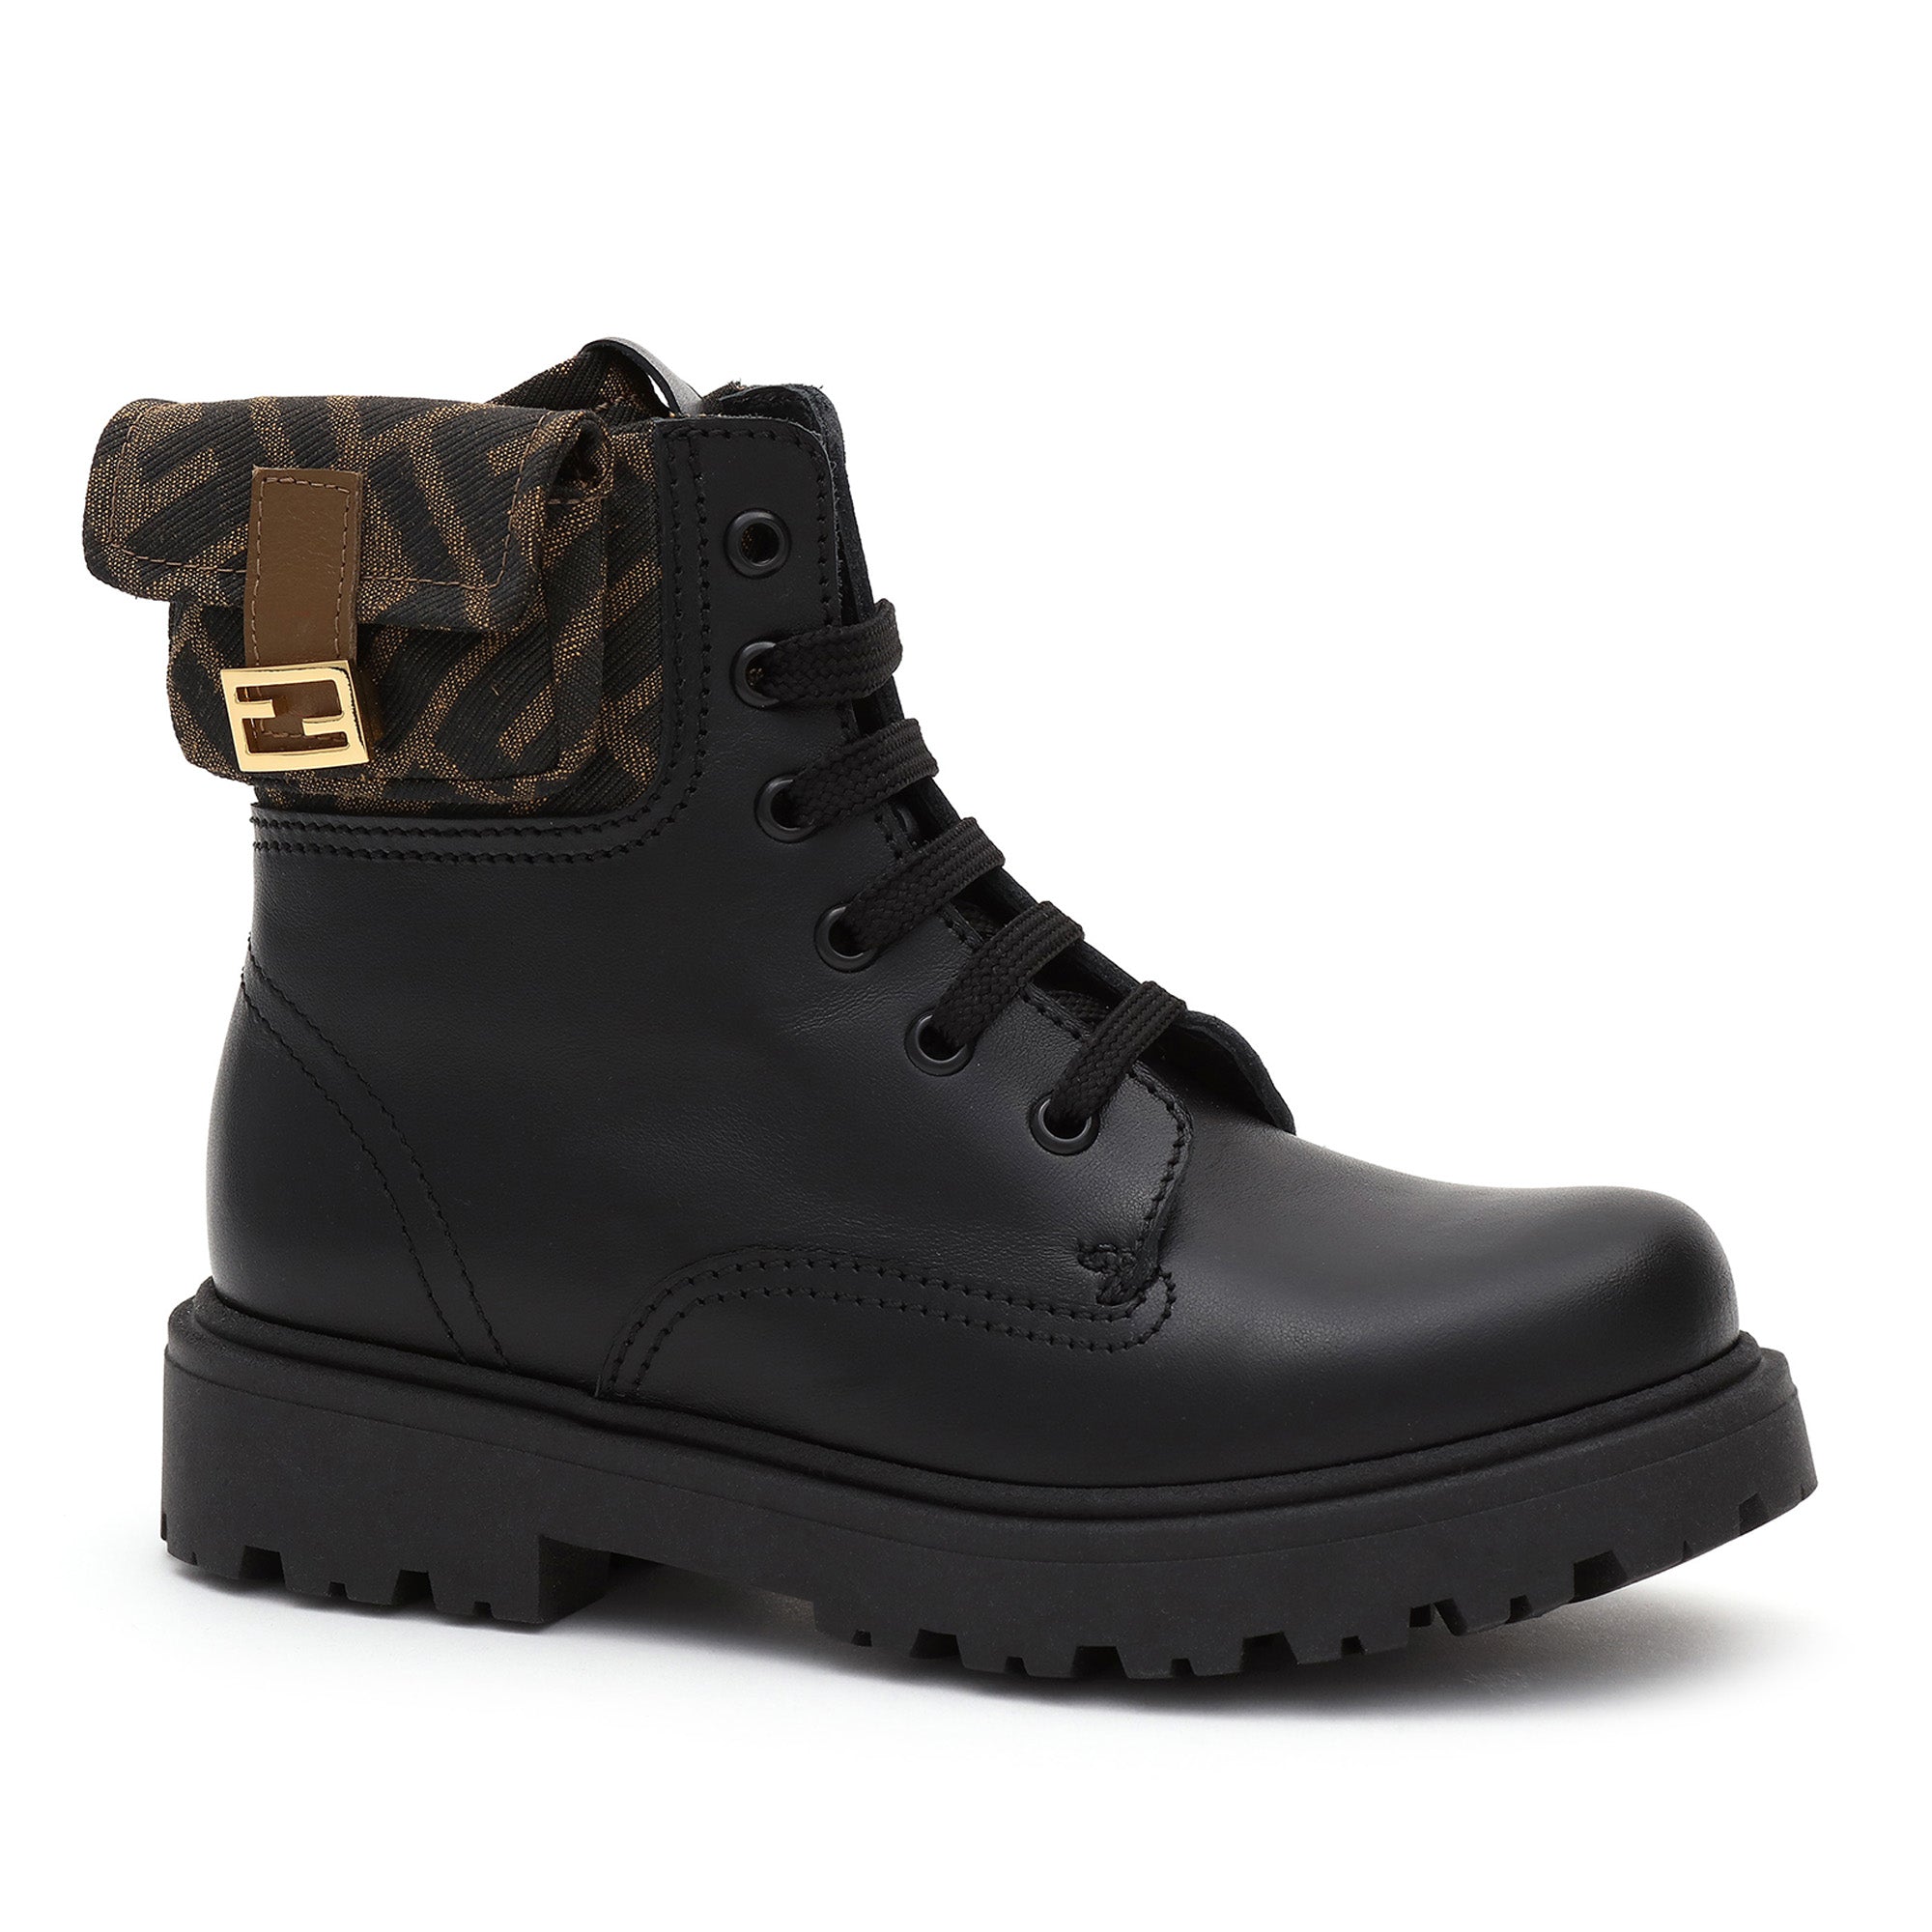 Fendi Black Leather Boots